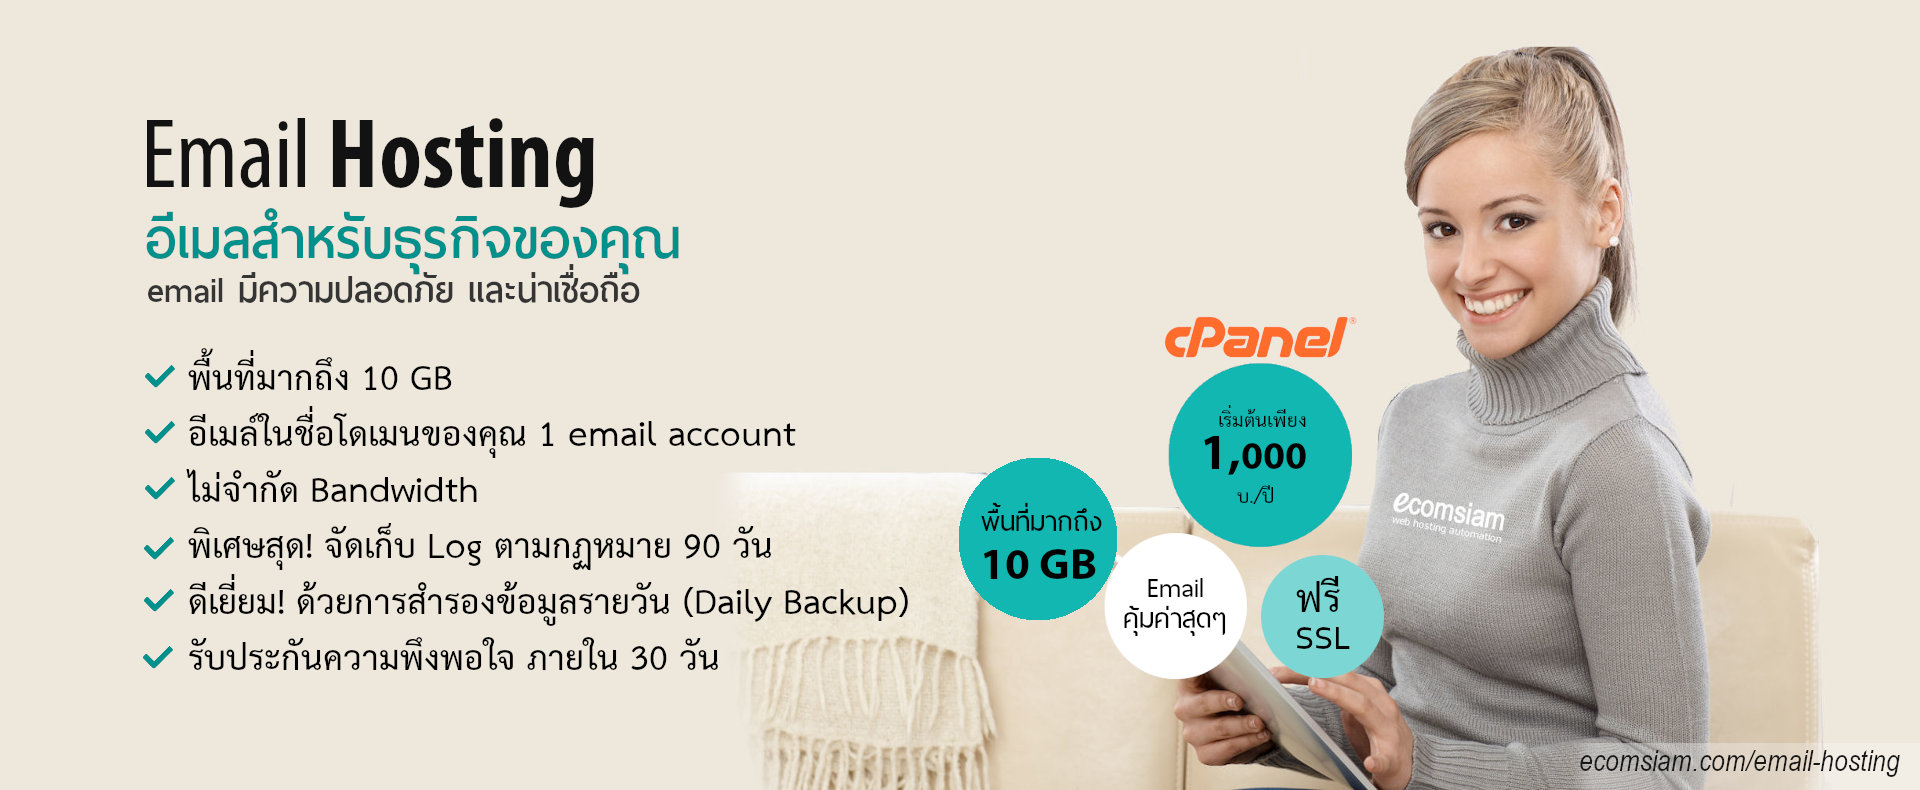 email hosting thai : บริการอีเมล์คุณภาพสูง สำหรับองค์กร พื้นที่ขนาดใหญ่ มีความปลอดภัยในการใช้งาน ราคาคุ้มสุดๆ ราคาไม่แพง เว็บโฮสติ้งไทย free SSL Email hosting พื้นที่มากถึง 10GB รายชื่ออีเมล์ 1 email ฟรี SSL เพียง 1000 บาทต่อปี ....